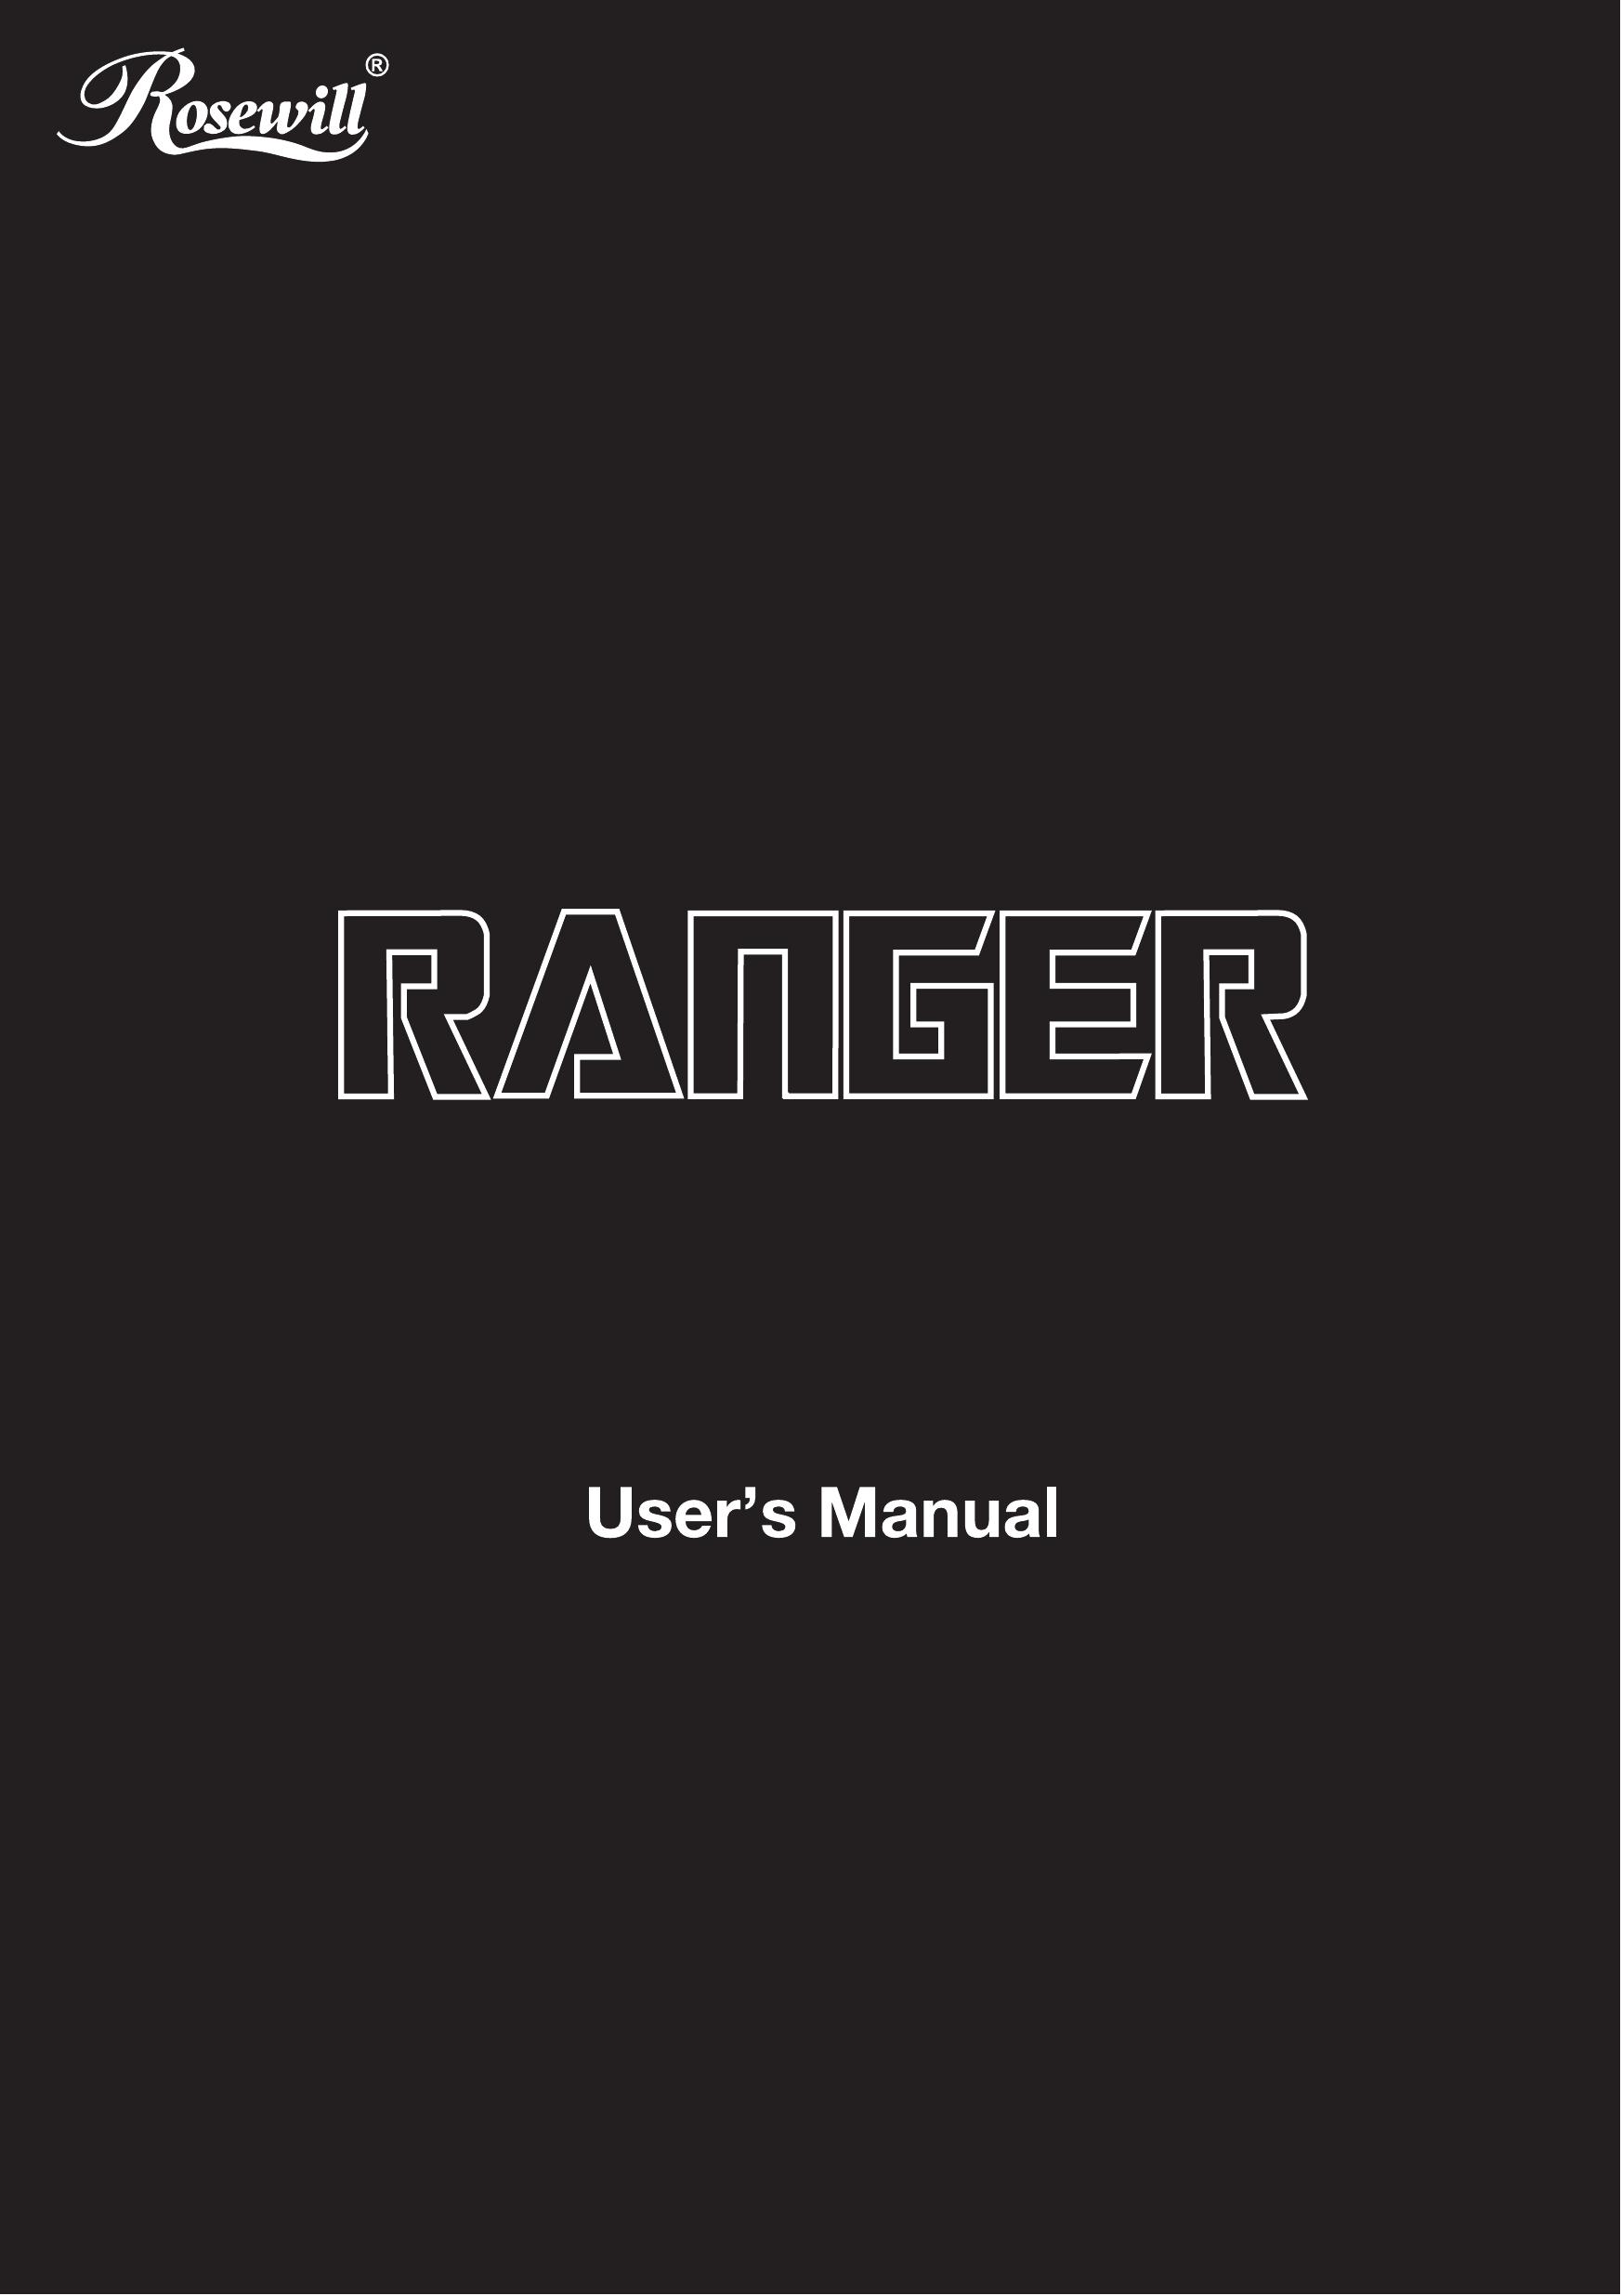 Rosewill ranger Wok User Manual